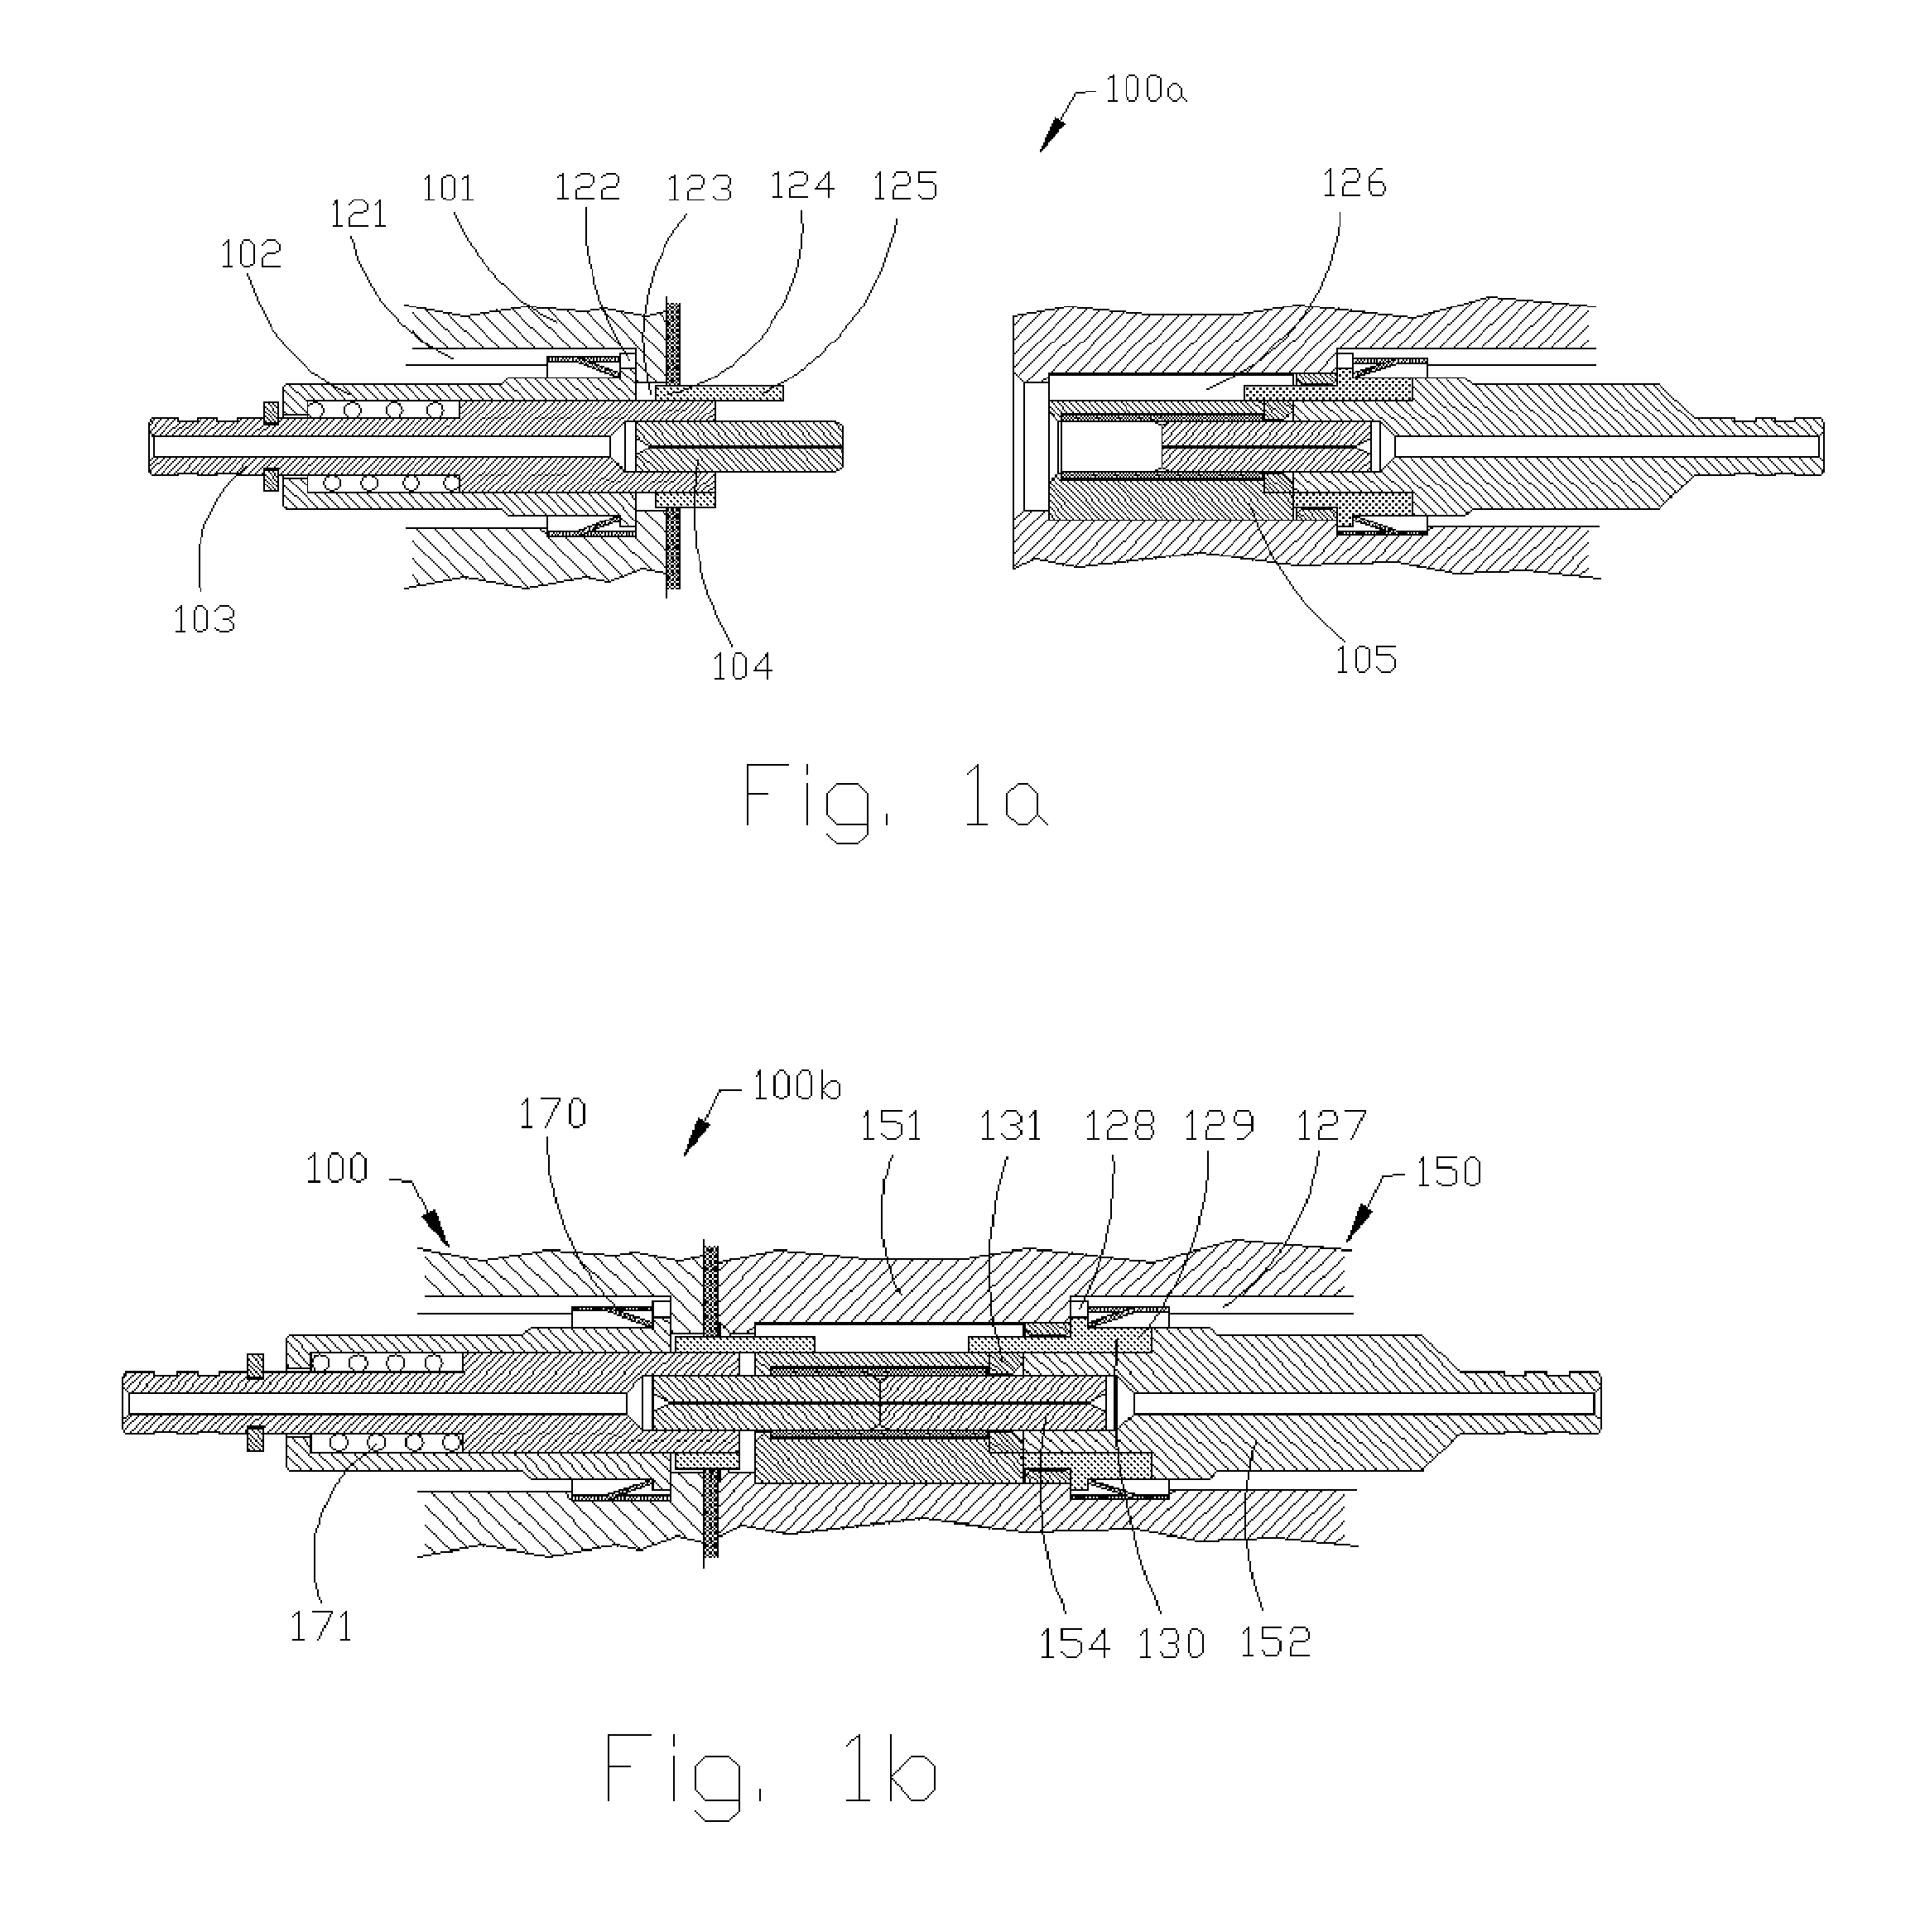 Polarization maintaining connectors